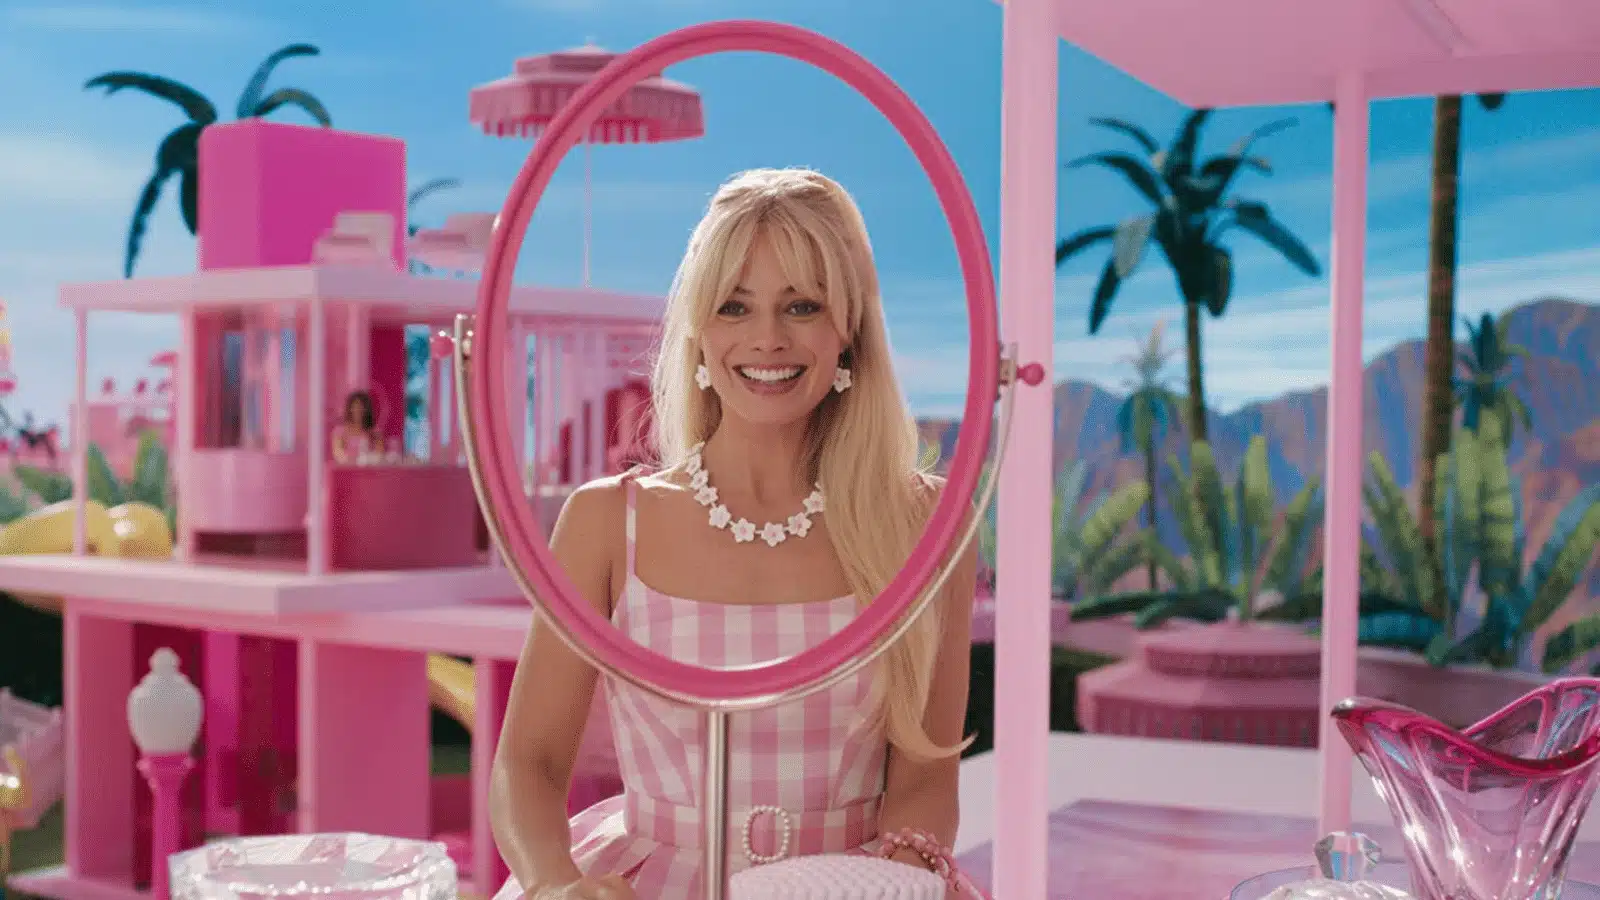 Recensione Barbie: il film con Margot Robbie e Ryan Gosling